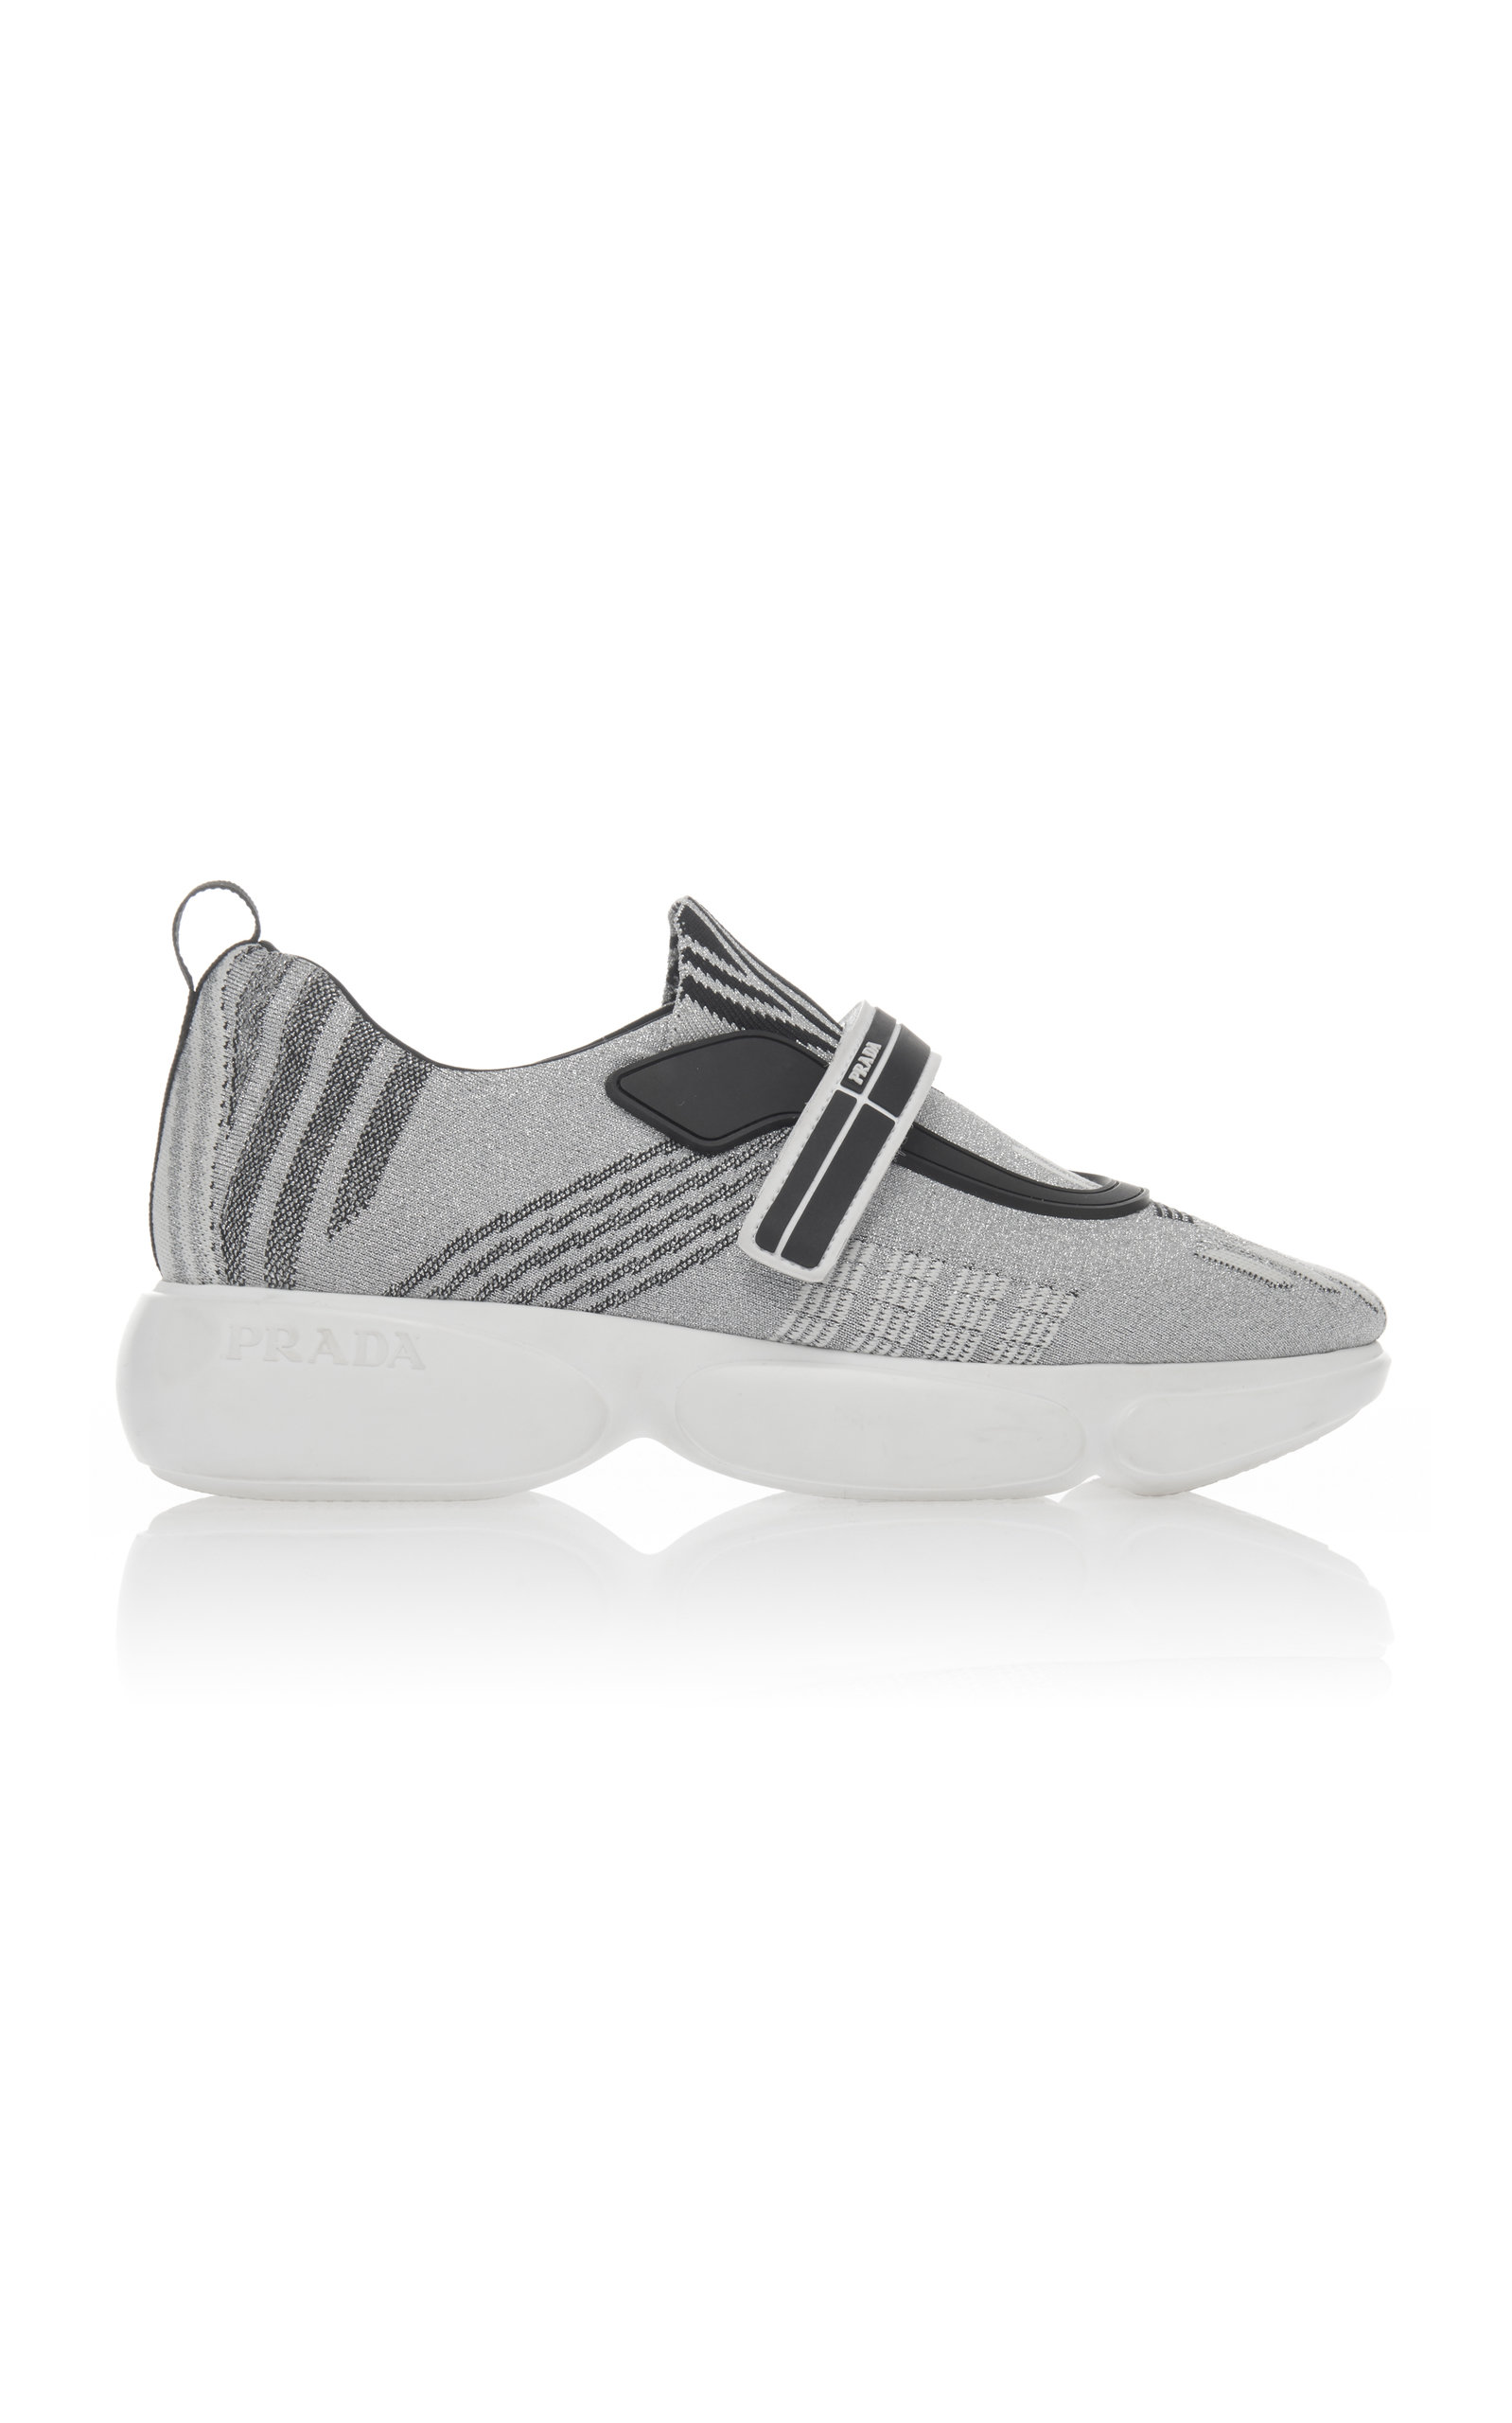 Prada - Women's Cloudbust Nylon Slip On Sneakers - Grey - IT 36 - Moda Operandi